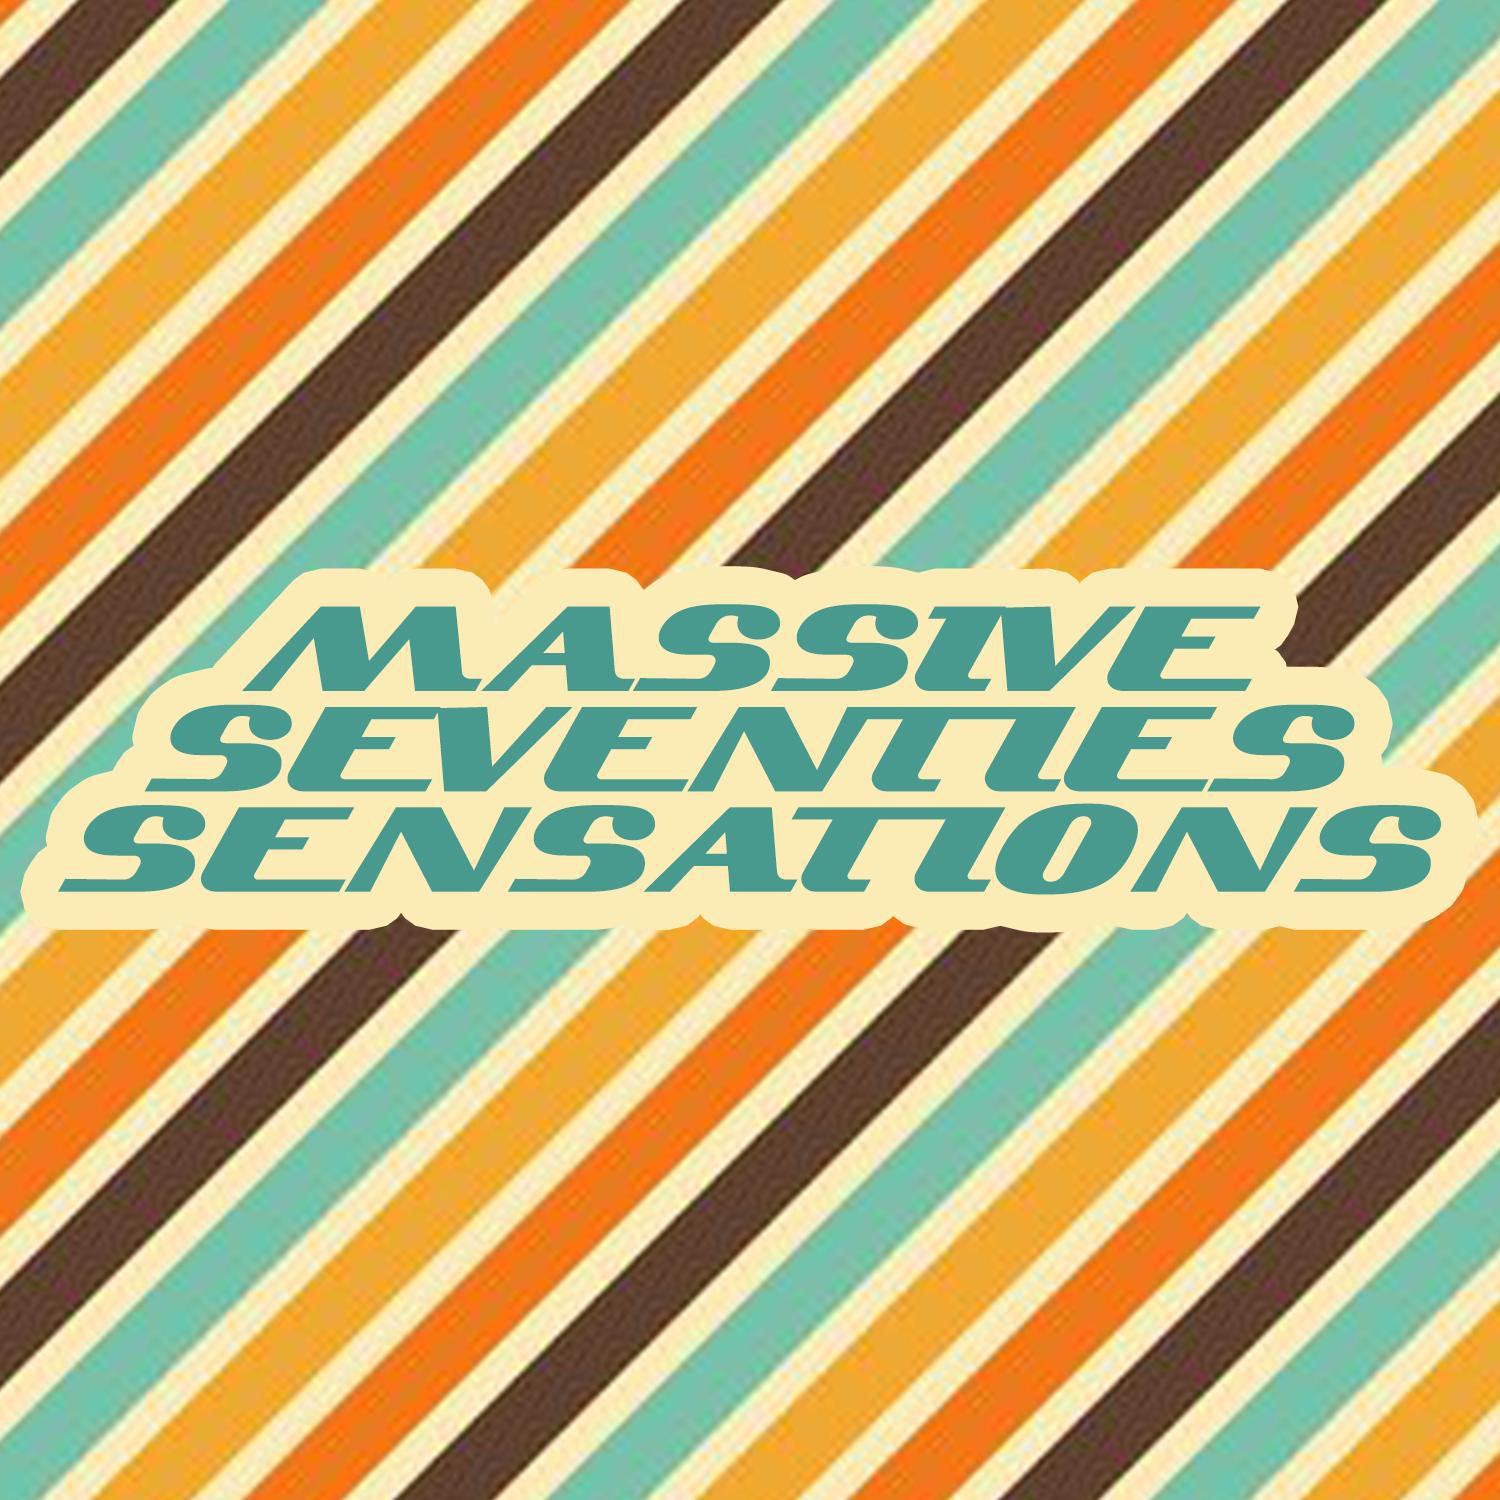 Massive Seventies Sensations